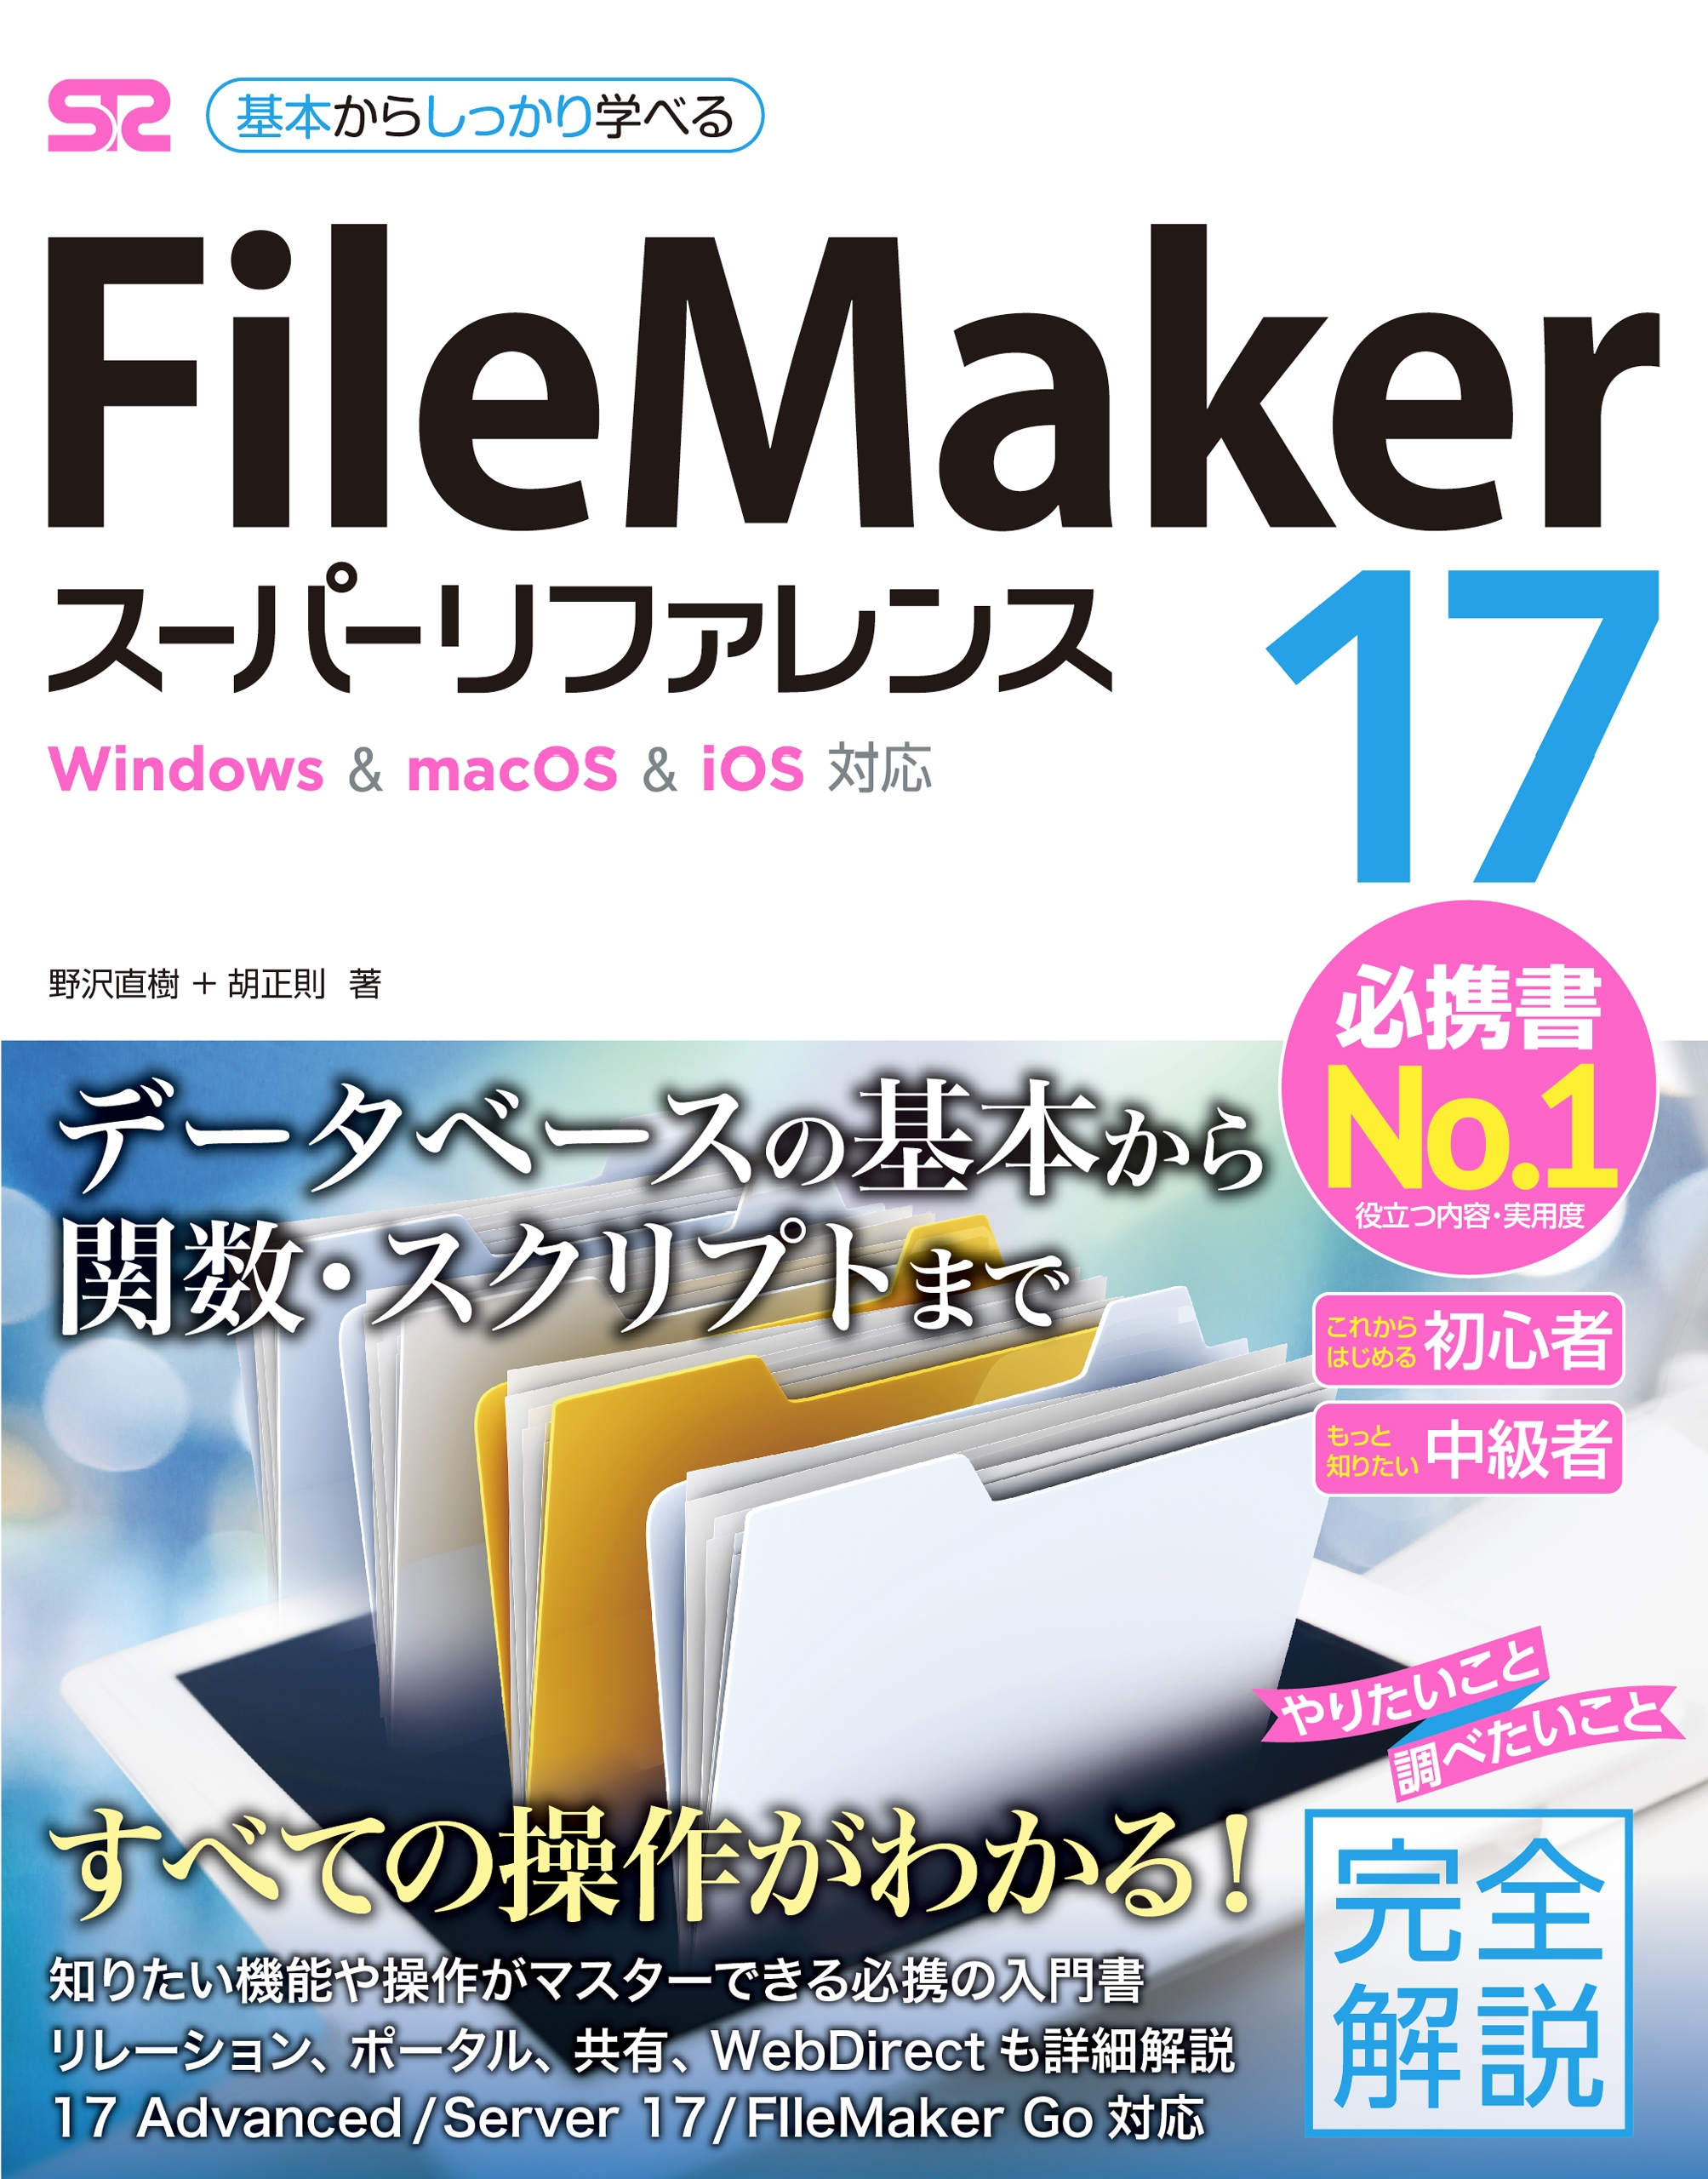 FileMaker 17 スーパーリファレンス Windowsmac OSiOS 対応 - 野沢直樹/胡正則 -  漫画・無料試し読みなら、電子書籍ストア ブックライブ